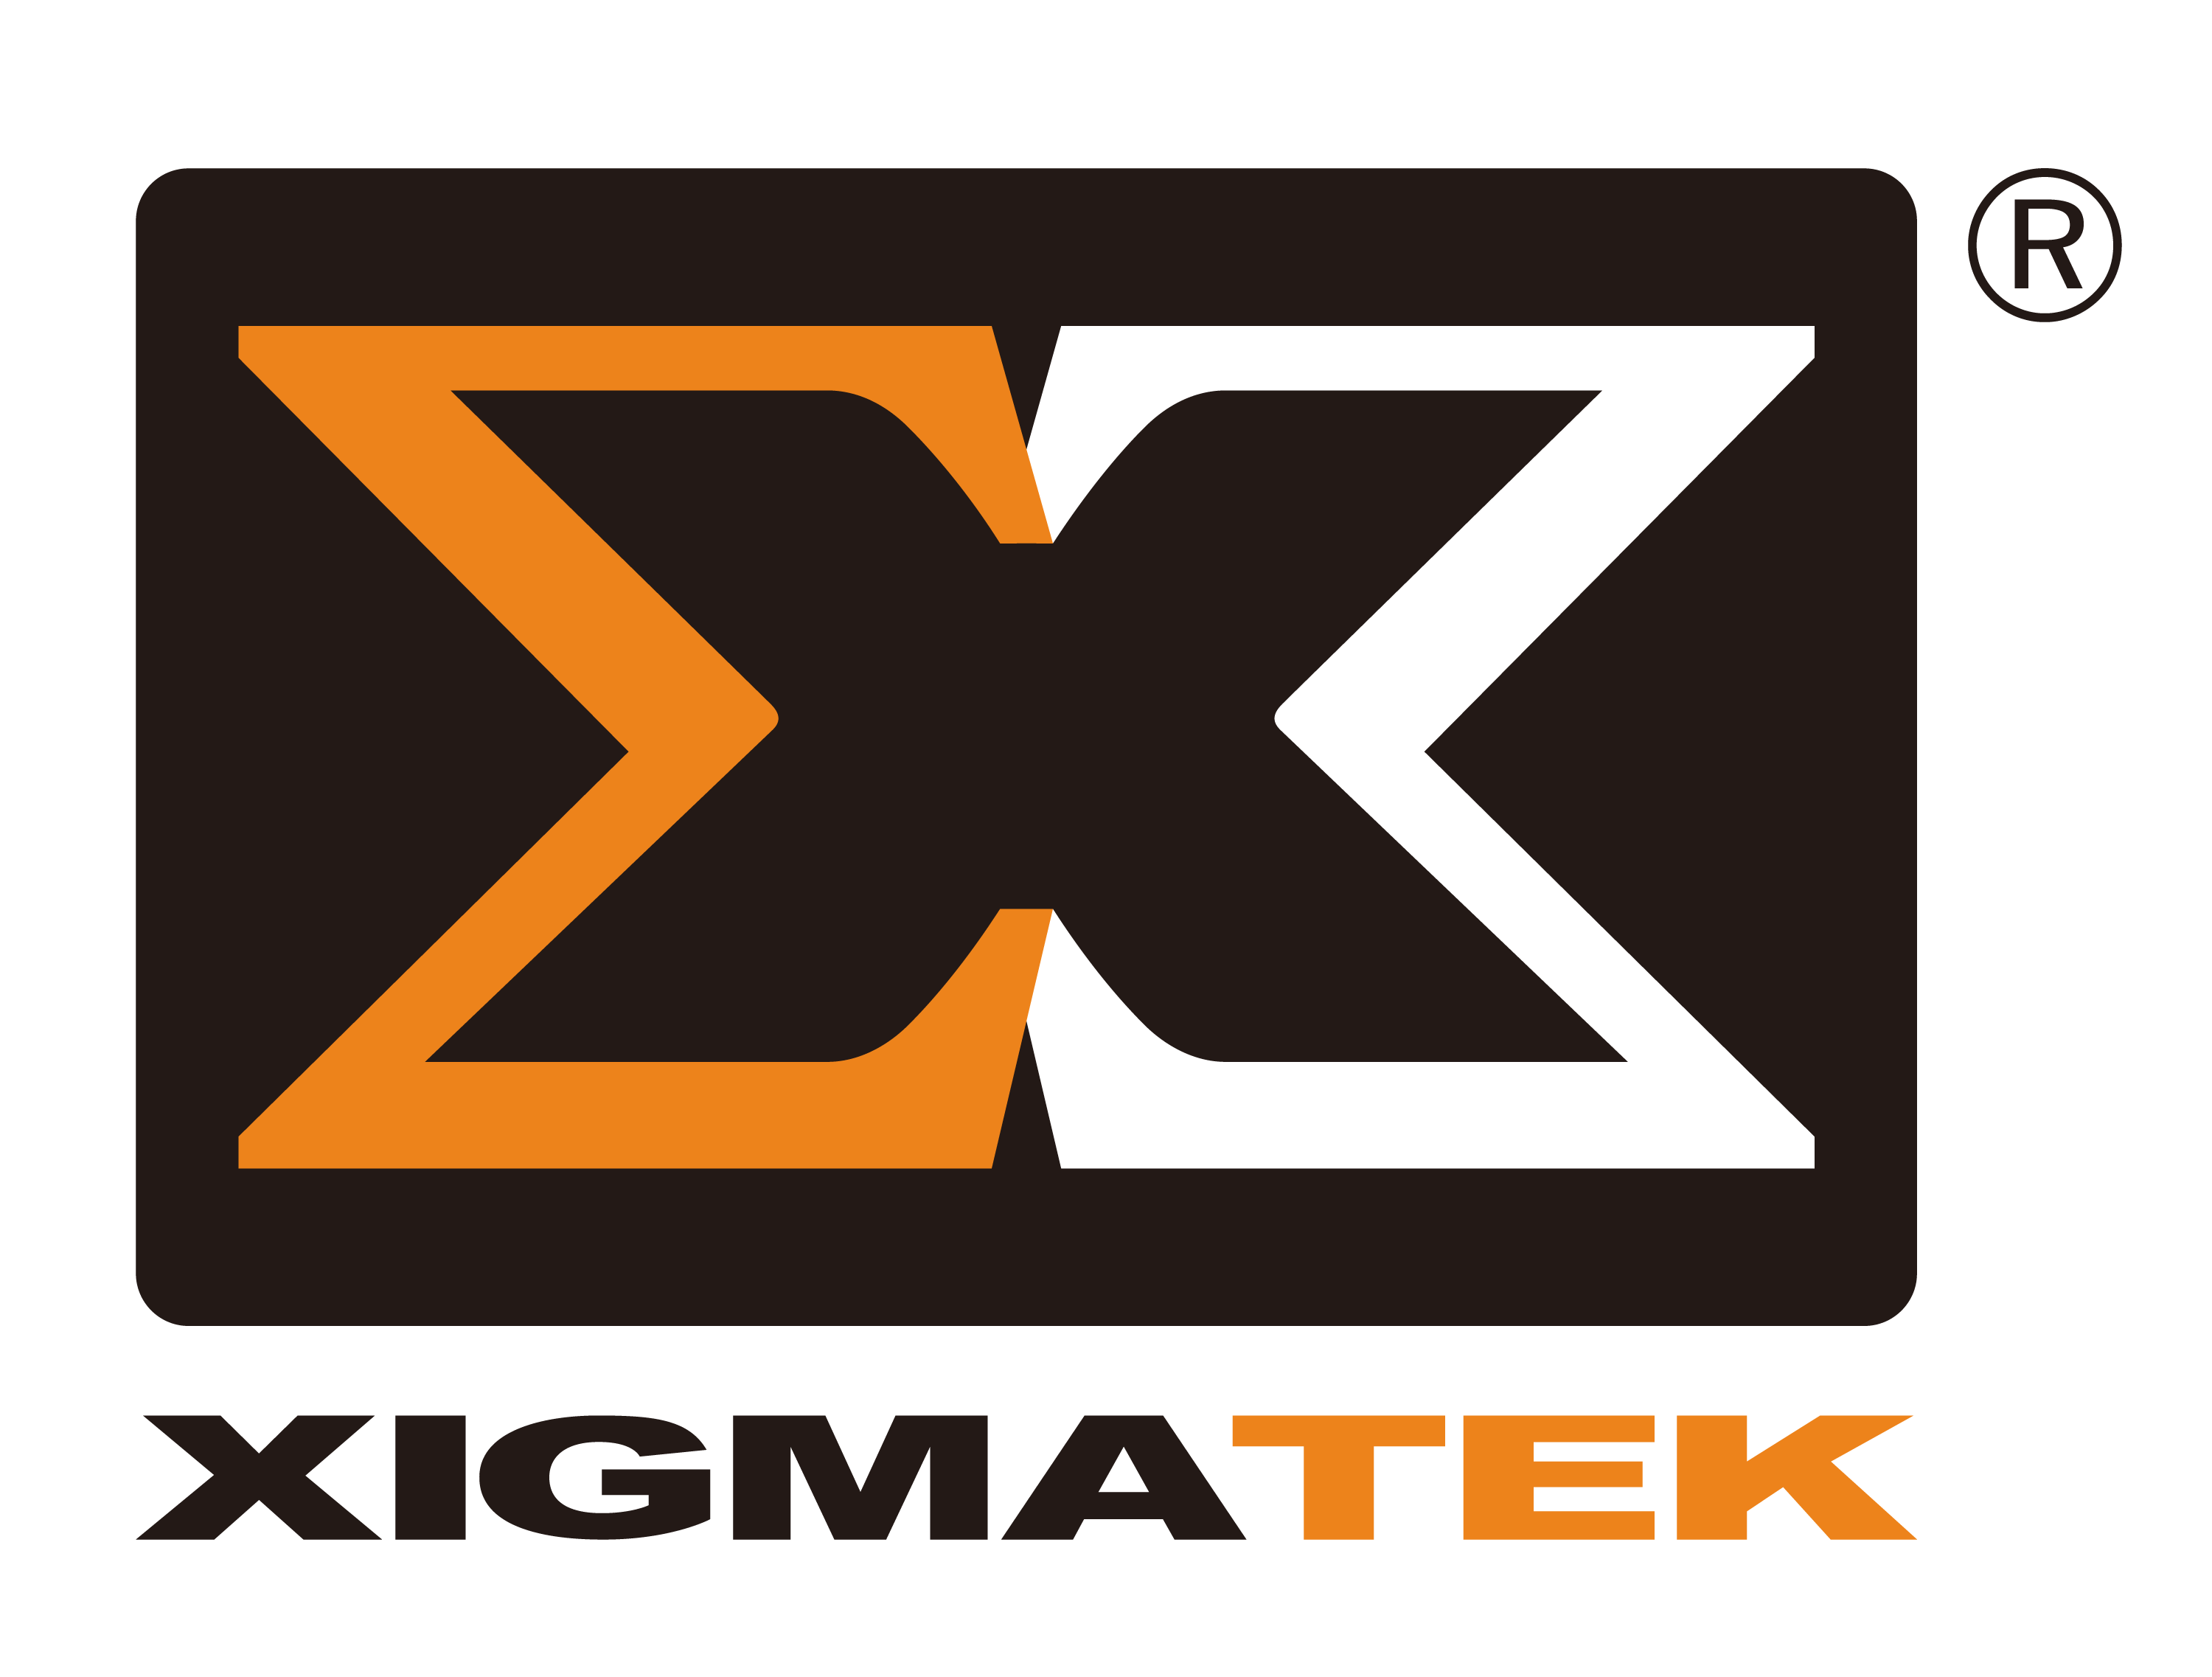 Xigmatek logo